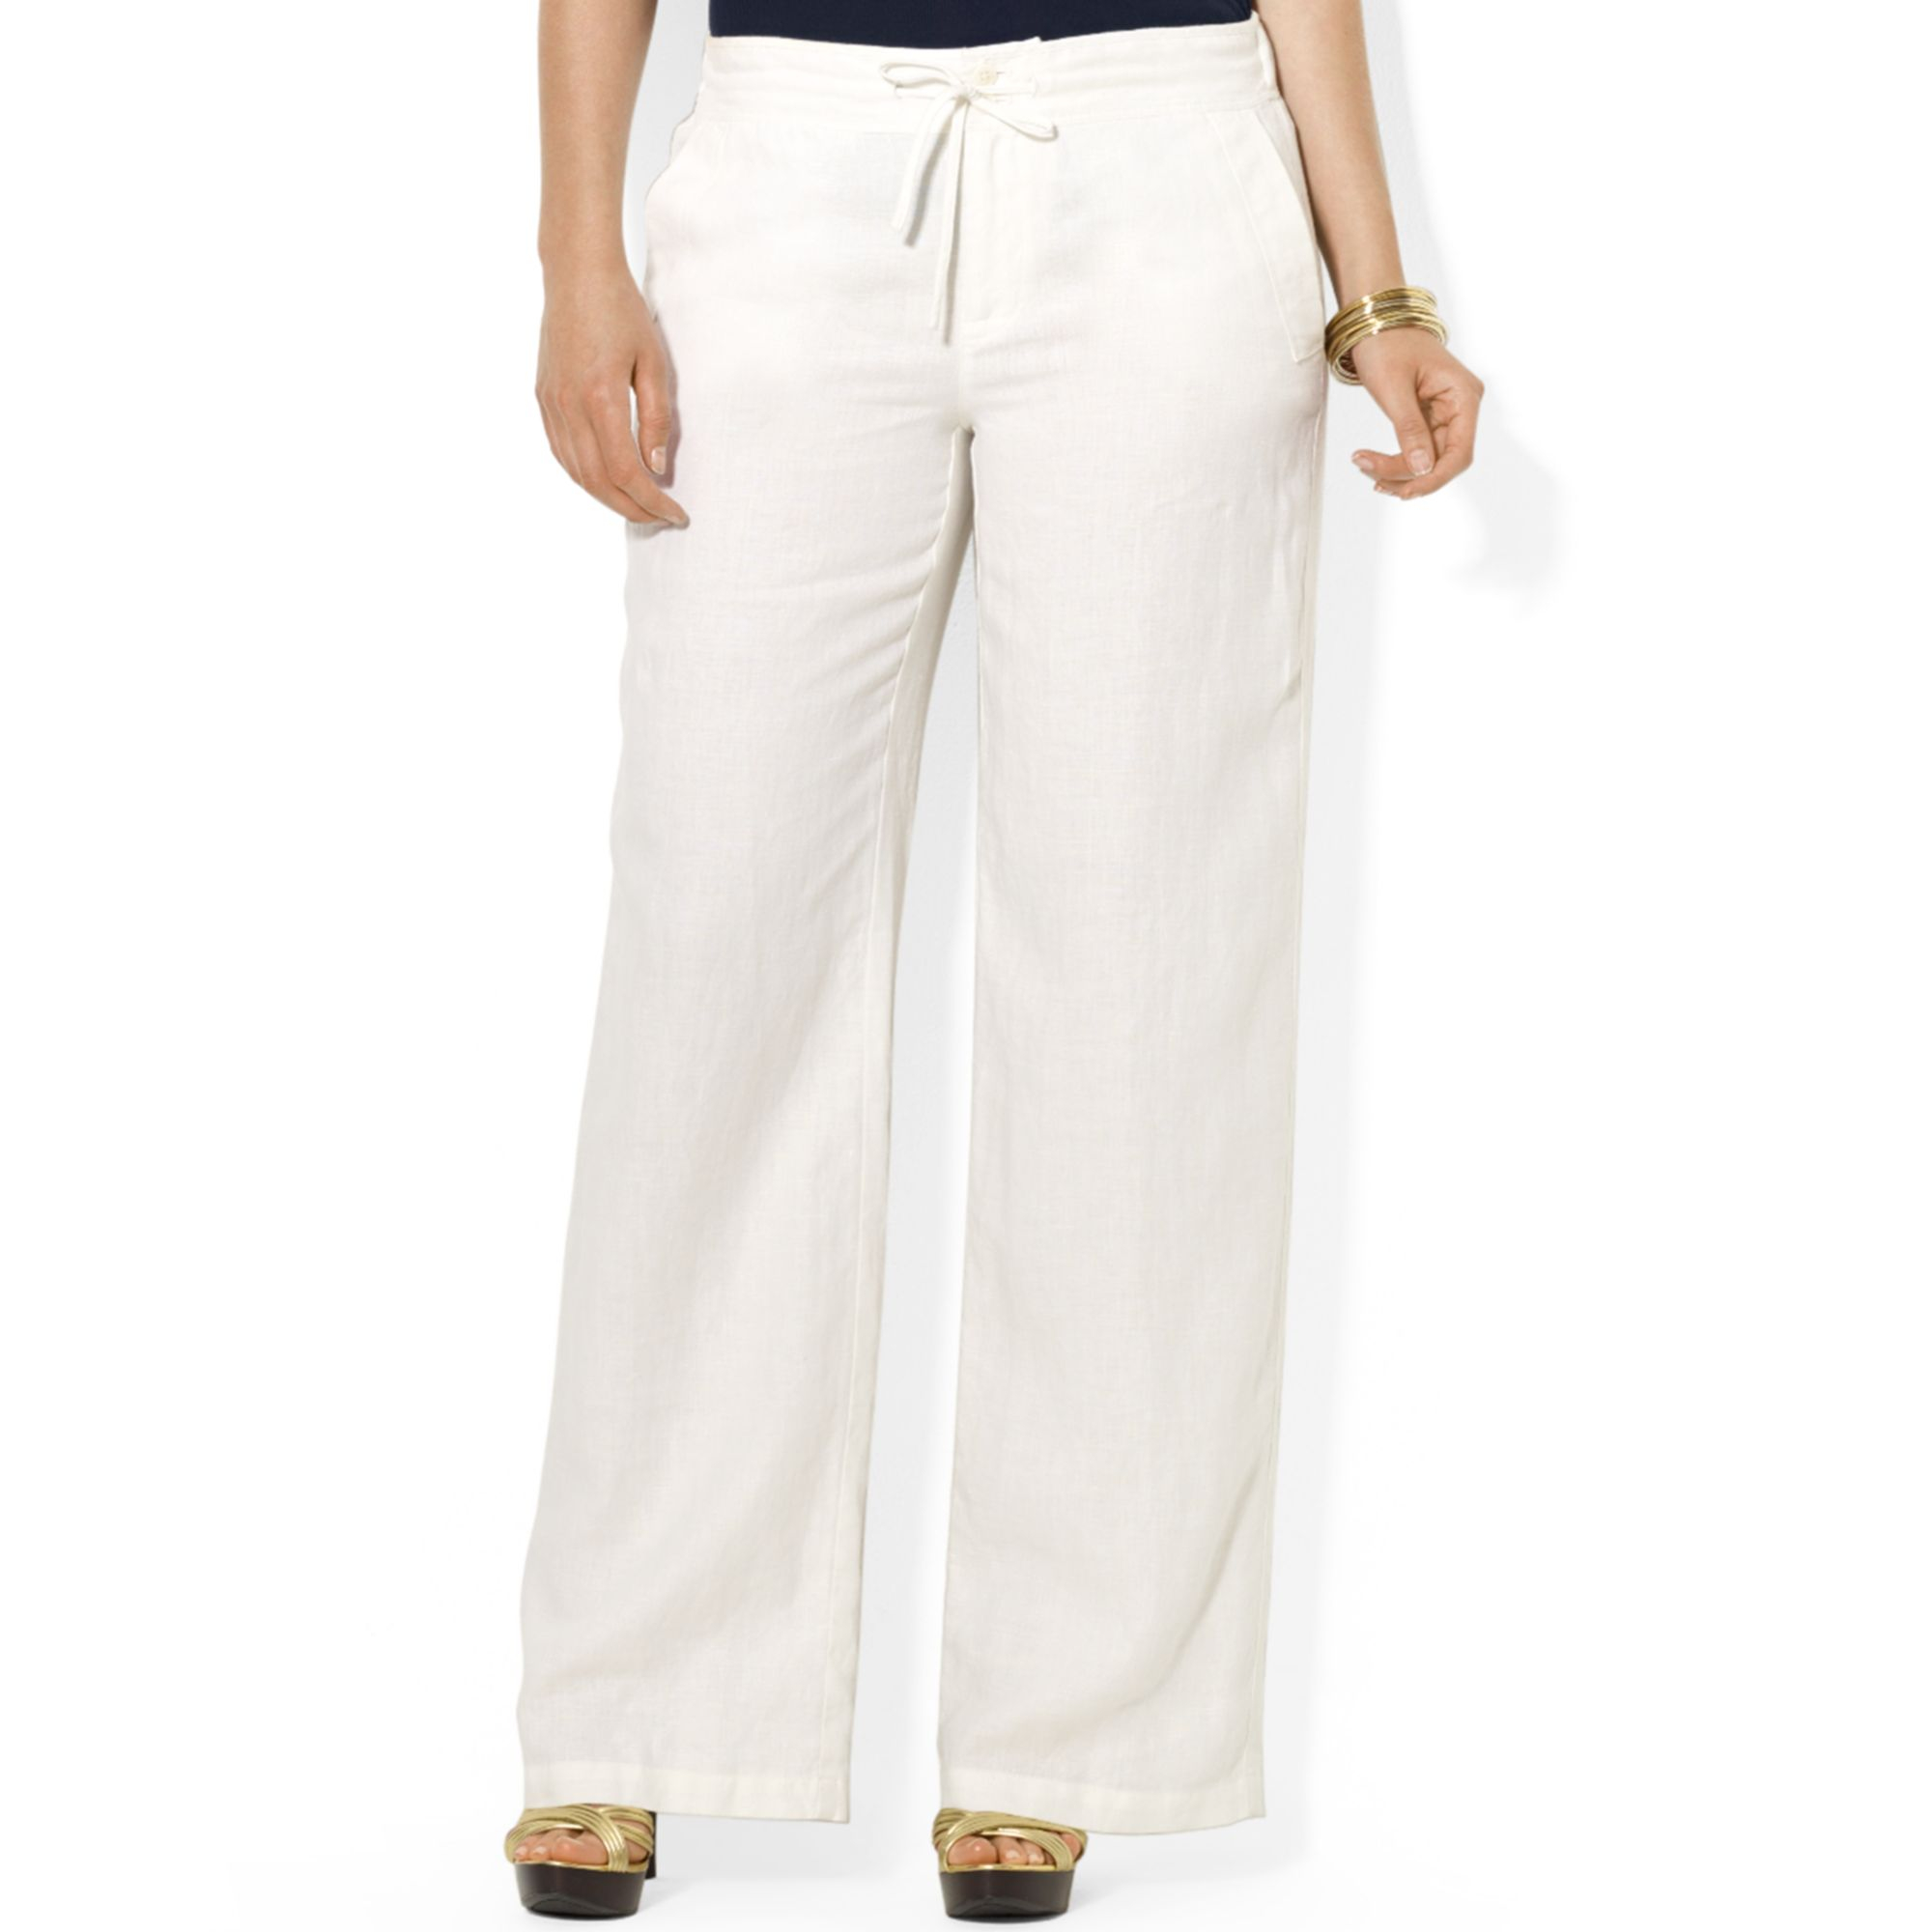 Lauren by Ralph Lauren Plus Size Wideleg Linen Pants in White - Lyst